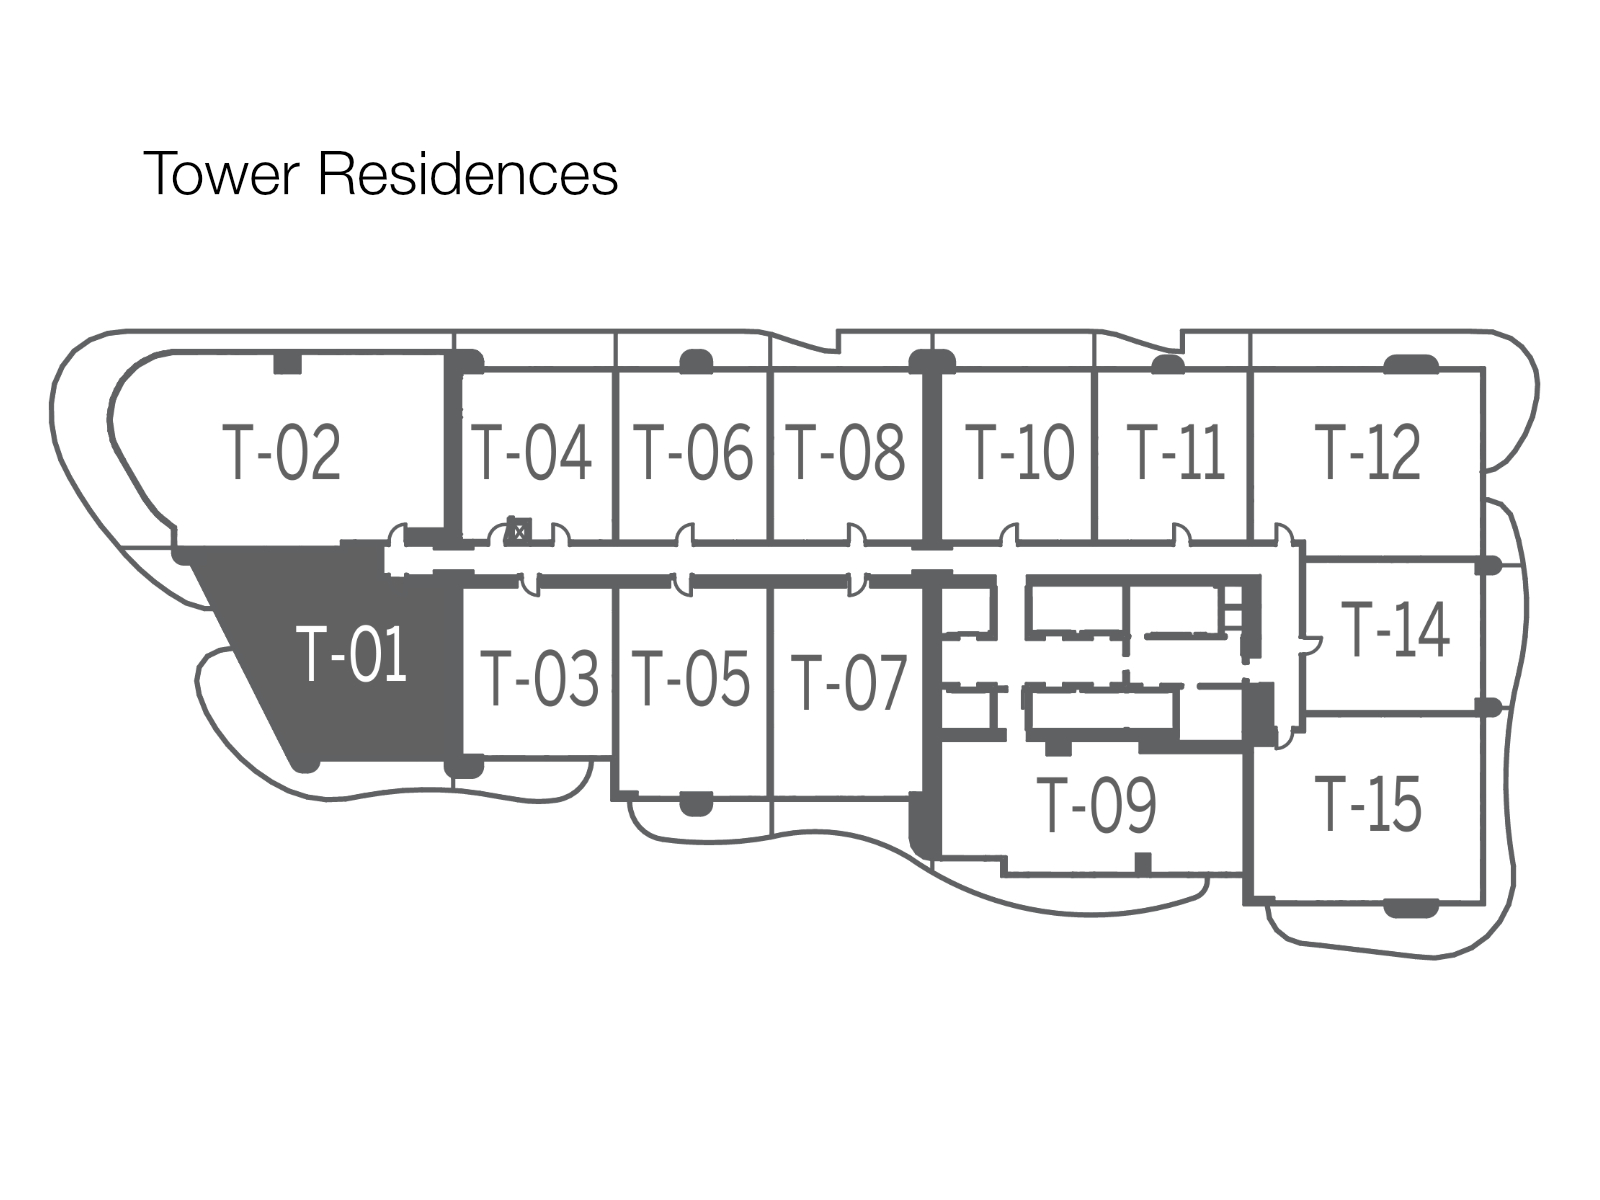 Brickell Flatiron Tower Key Plan